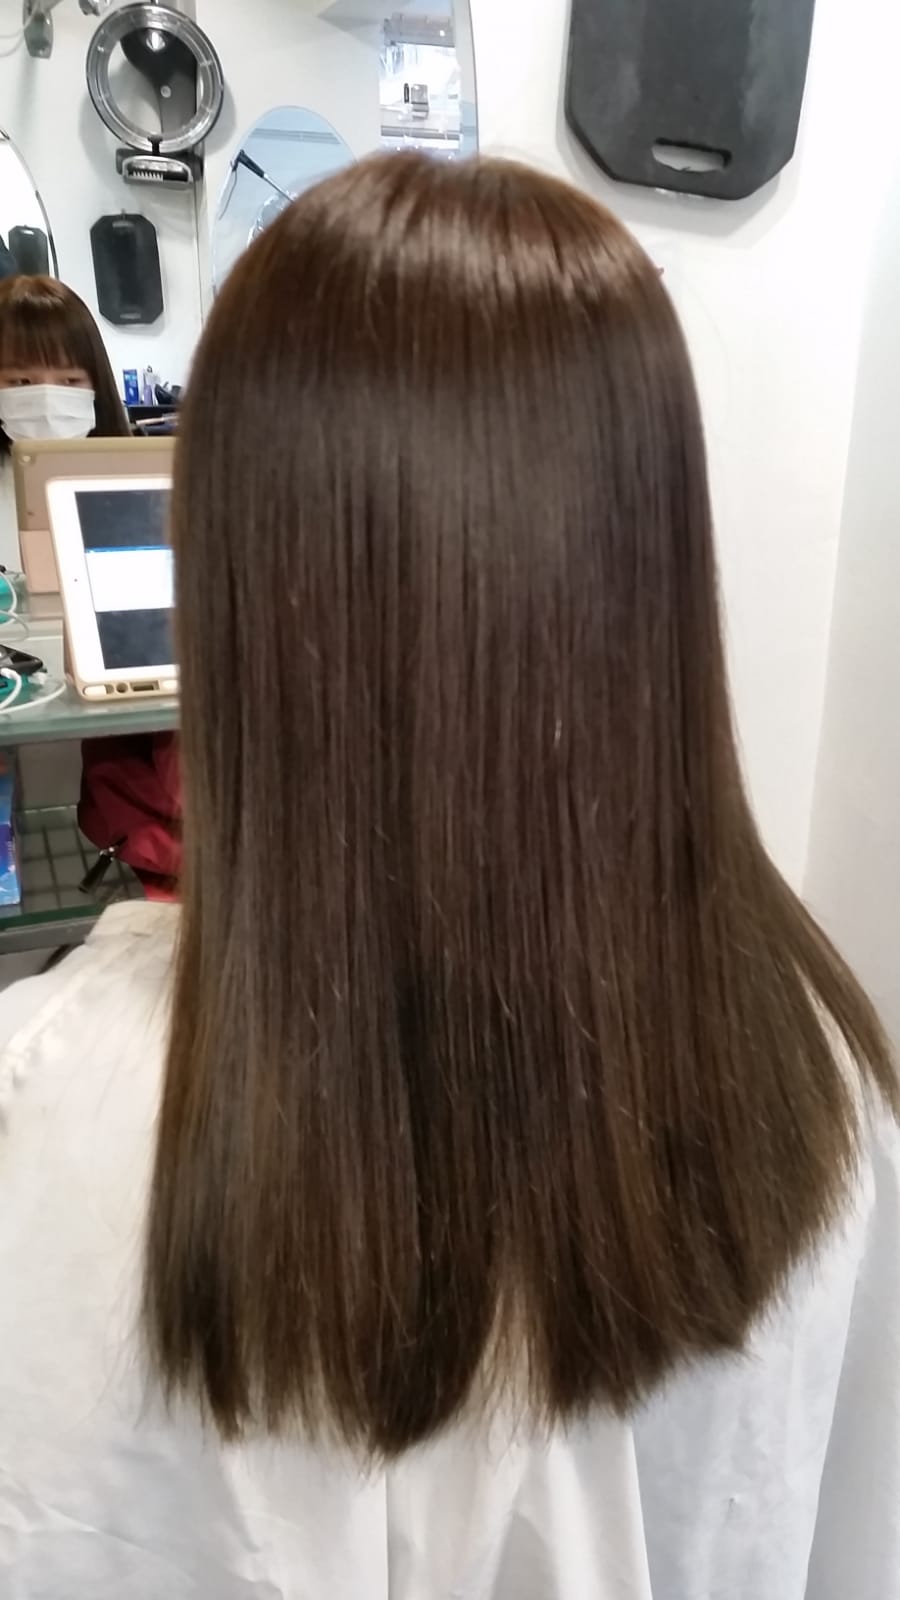  I do Hair ®之髮型作品: ✨ 日本溶濟PAIMORE 直髮療程 ✨ 